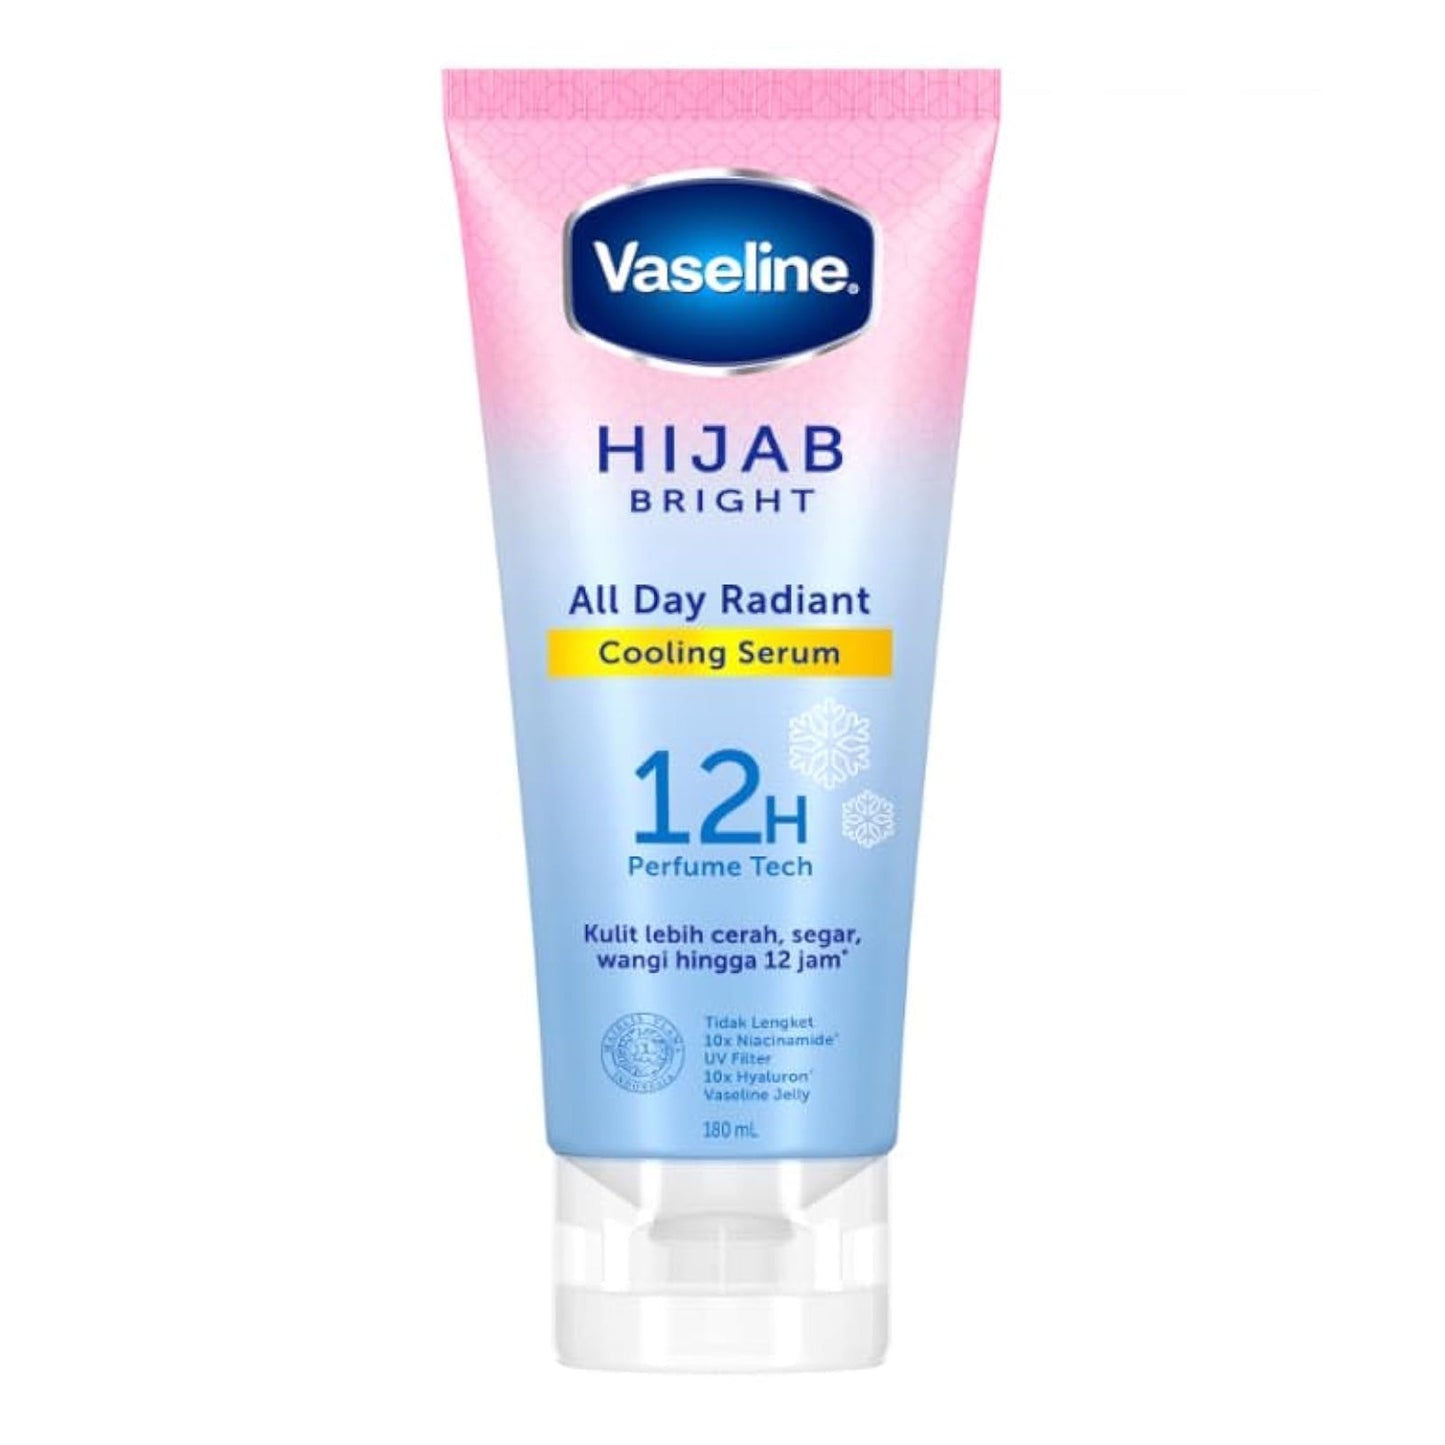 Vaseline - Hijab Bright All Day Radiant Cooling Serum - 180ml